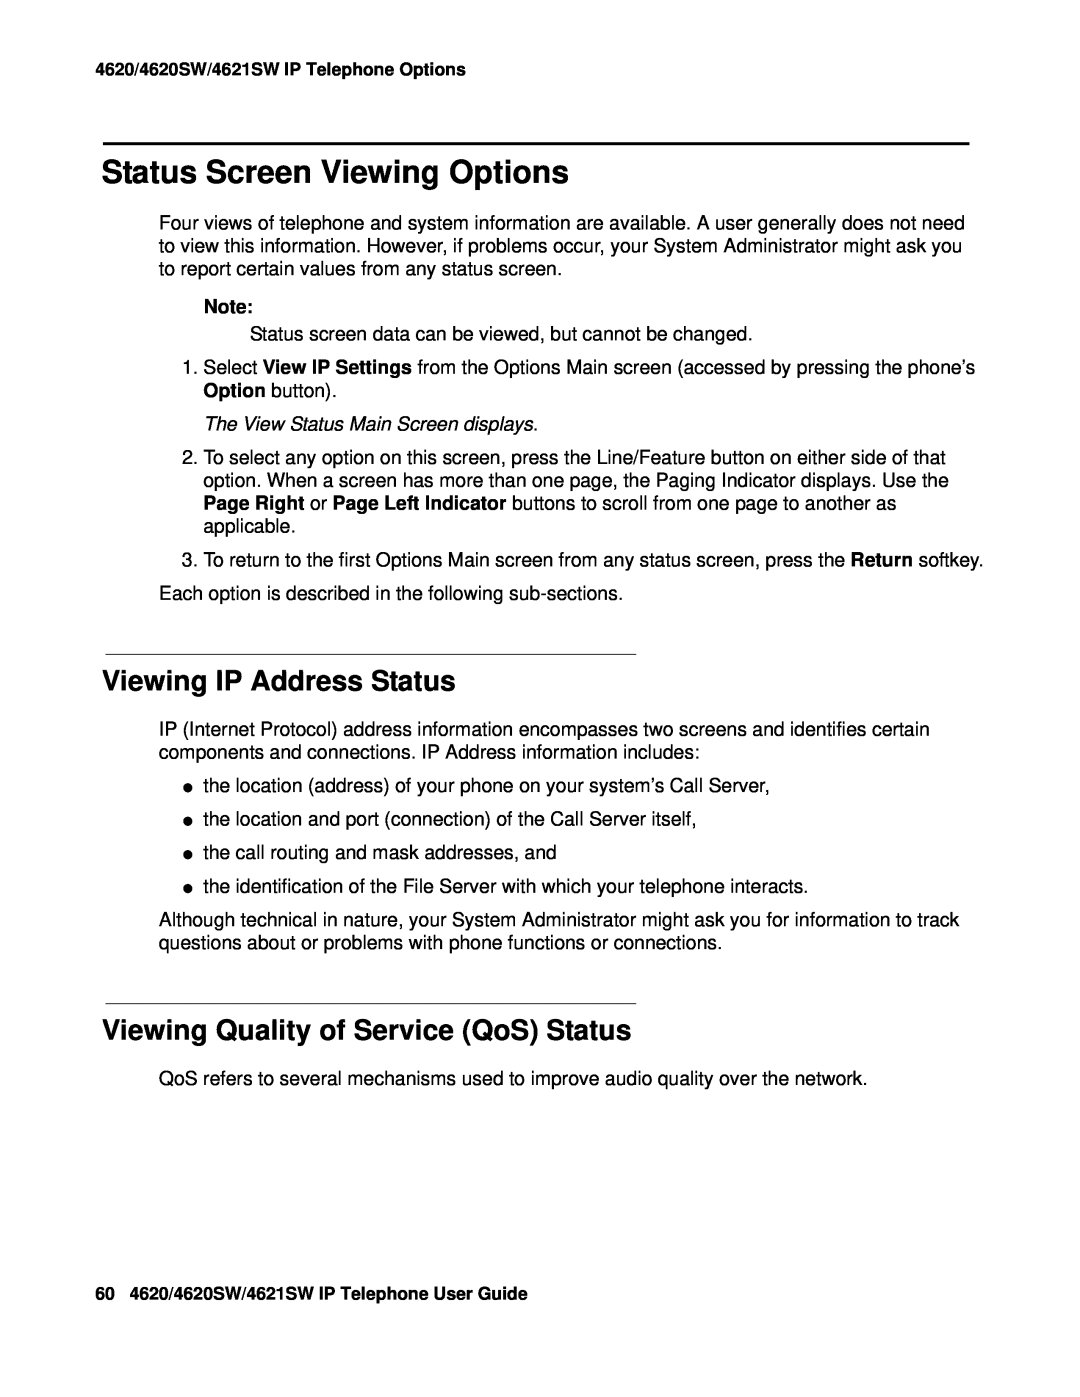 Avaya 4620SW, 4621SW manual Status Screen Viewing Options, Viewing IP Address Status, Viewing Quality of Service QoS Status 